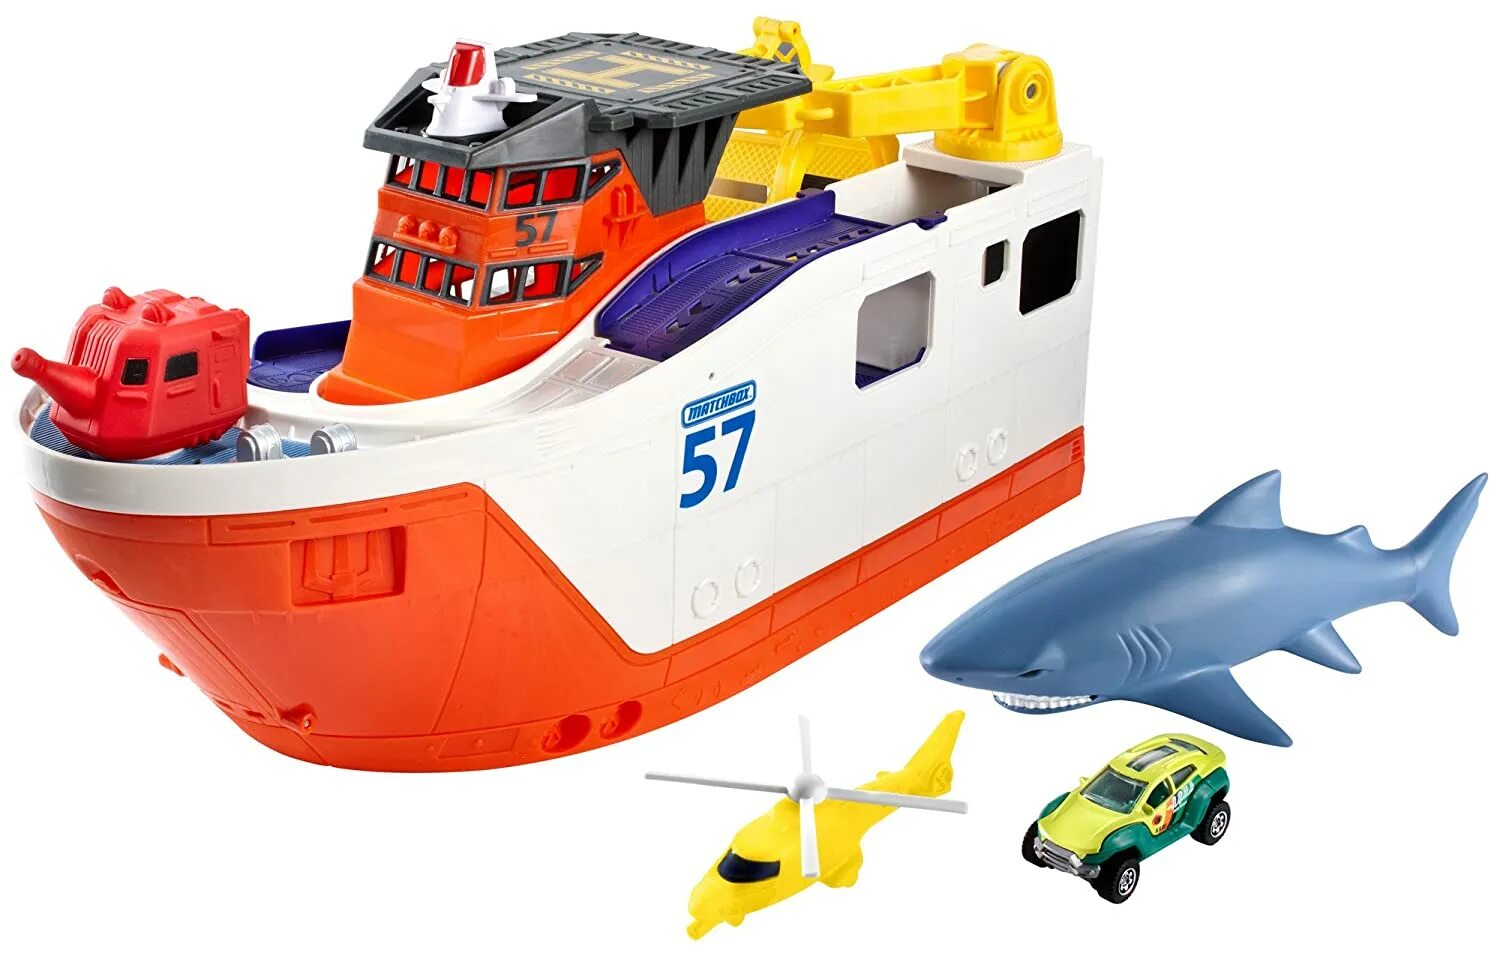 Matchbox 57 Marine Rescue Shark. Matchbox Mission: Marine Rescue Shark ship. Игровой набор Matchbox Mission Marine Rescue Shark ship Play Set. Matchbox корабль.